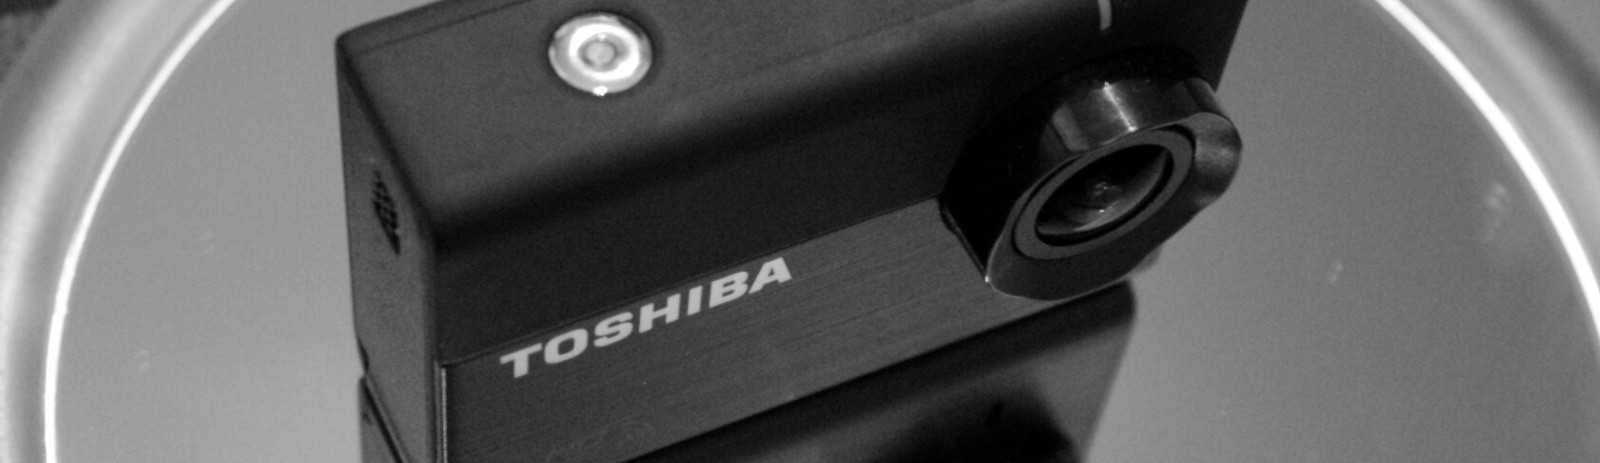 Toshiba-X-Sport Camera